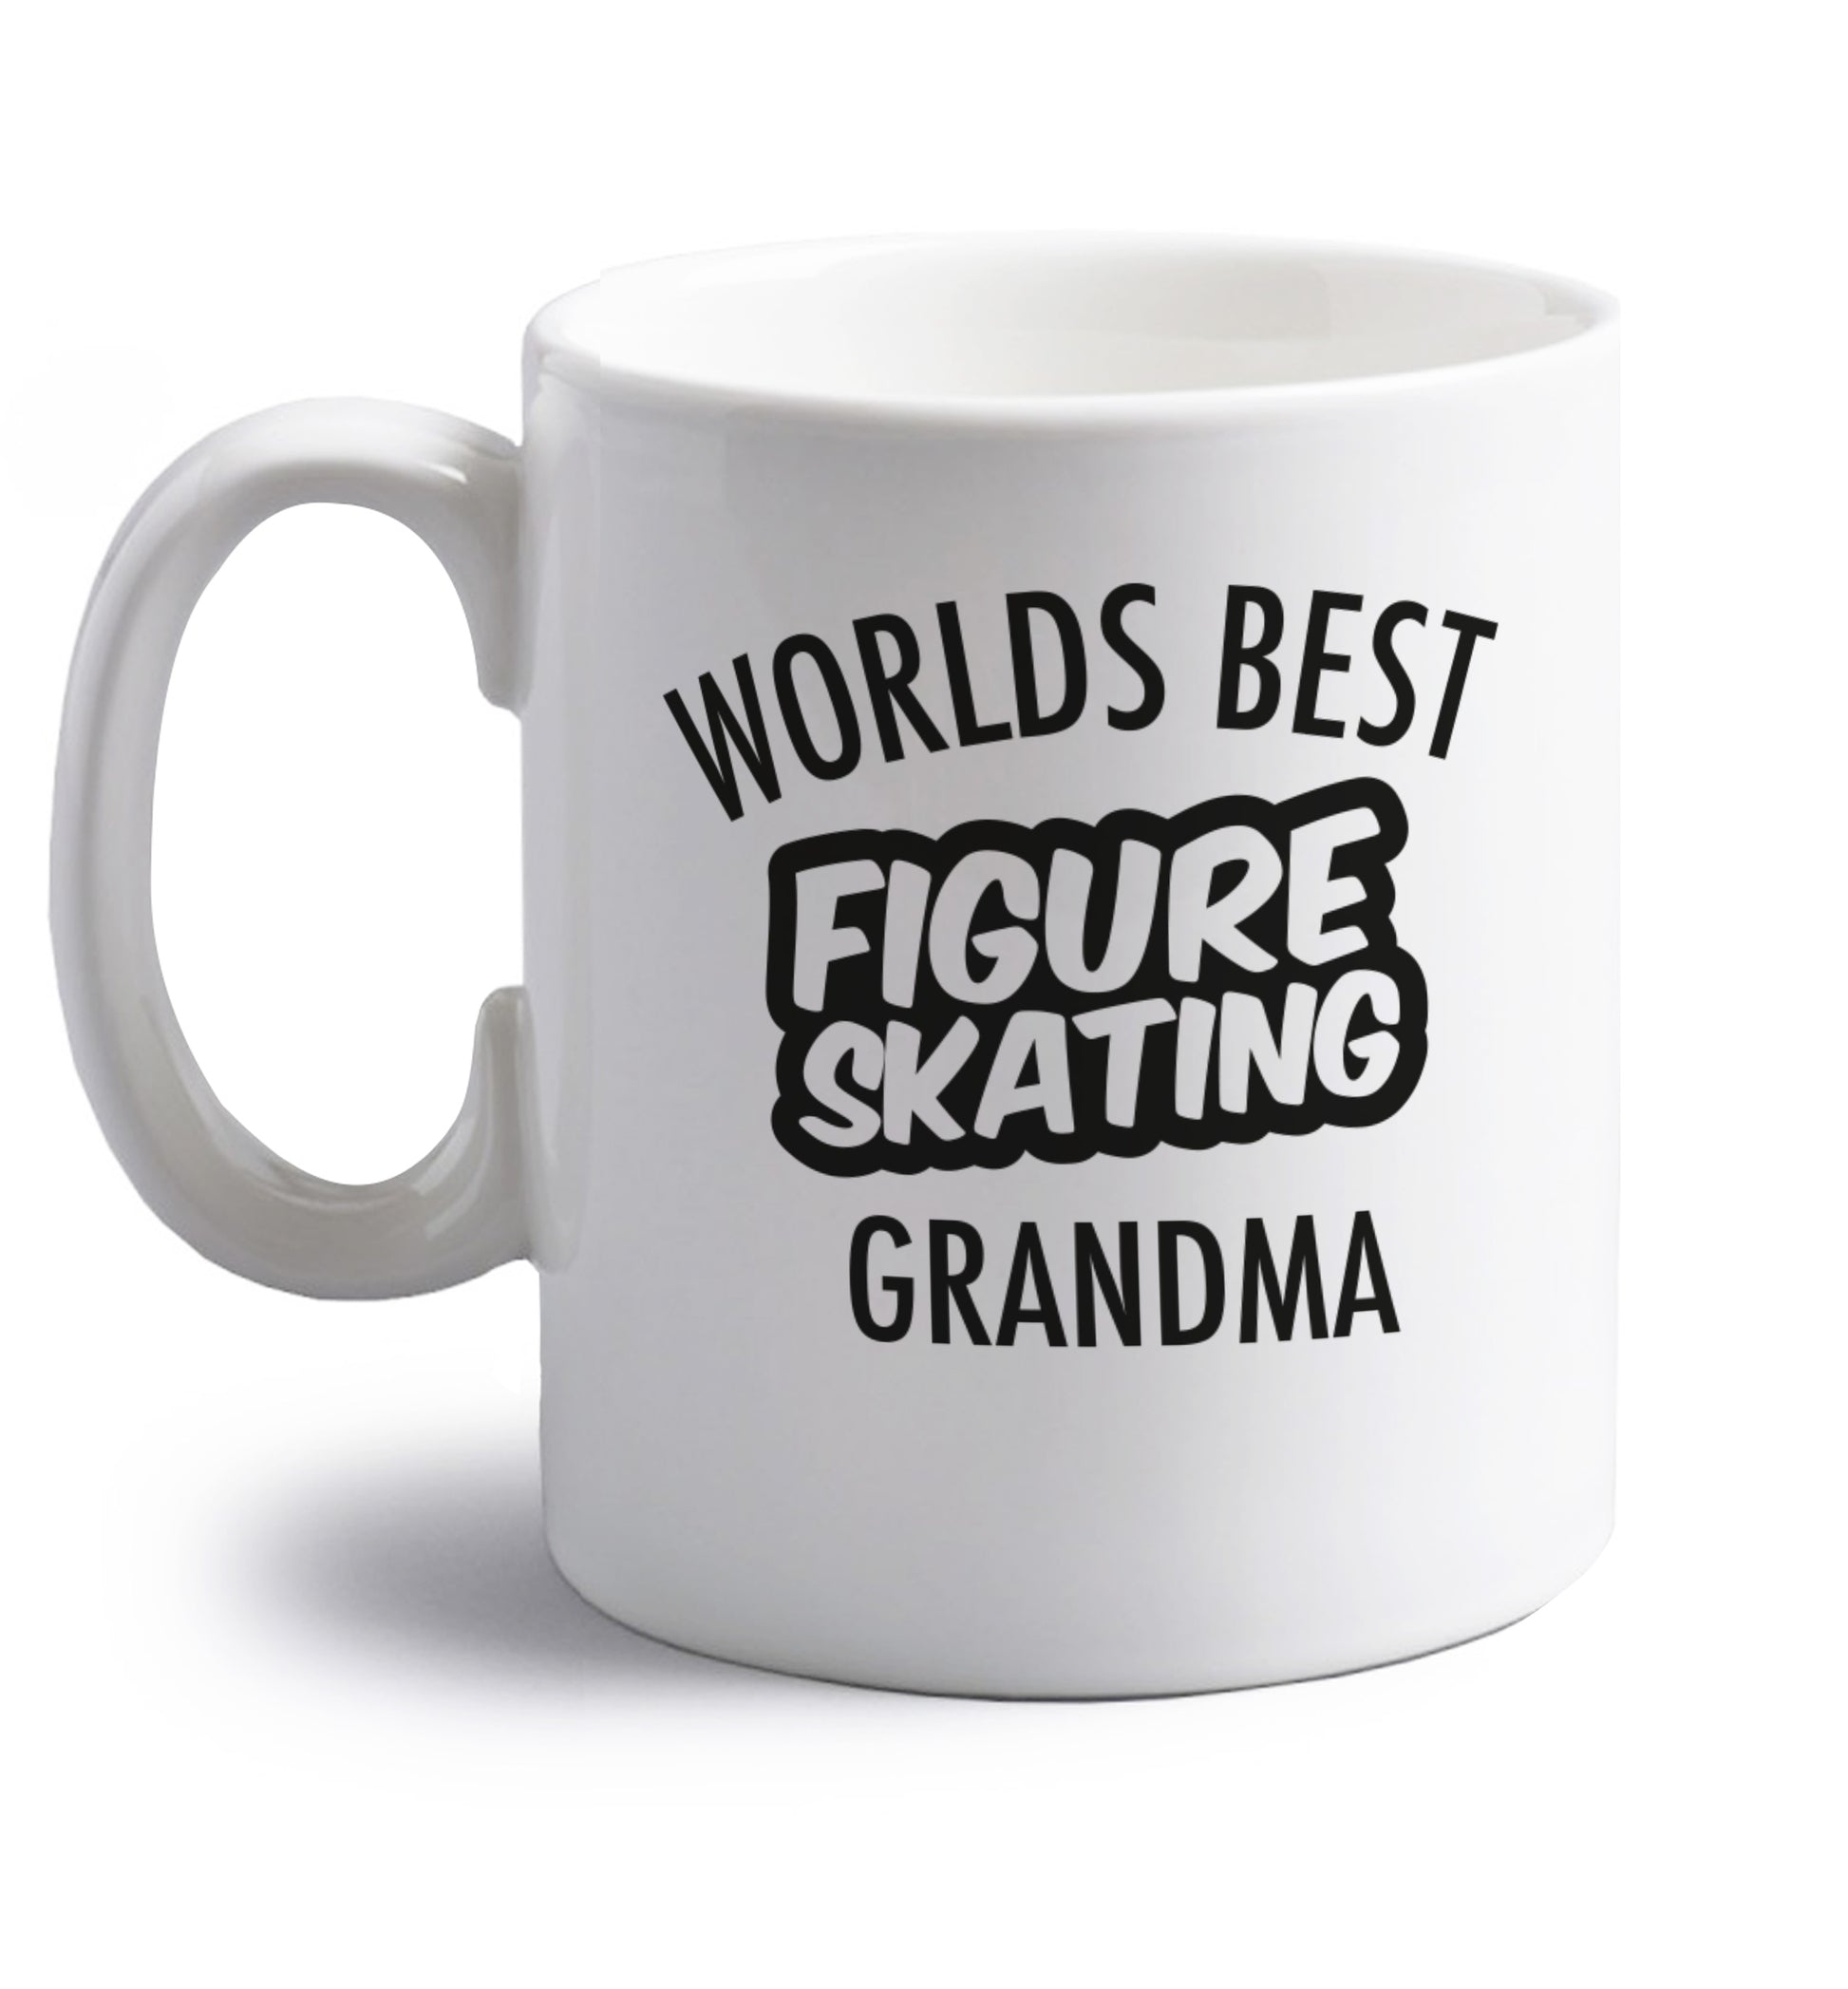 Worlds best figure skating grandma right handed white ceramic mug 